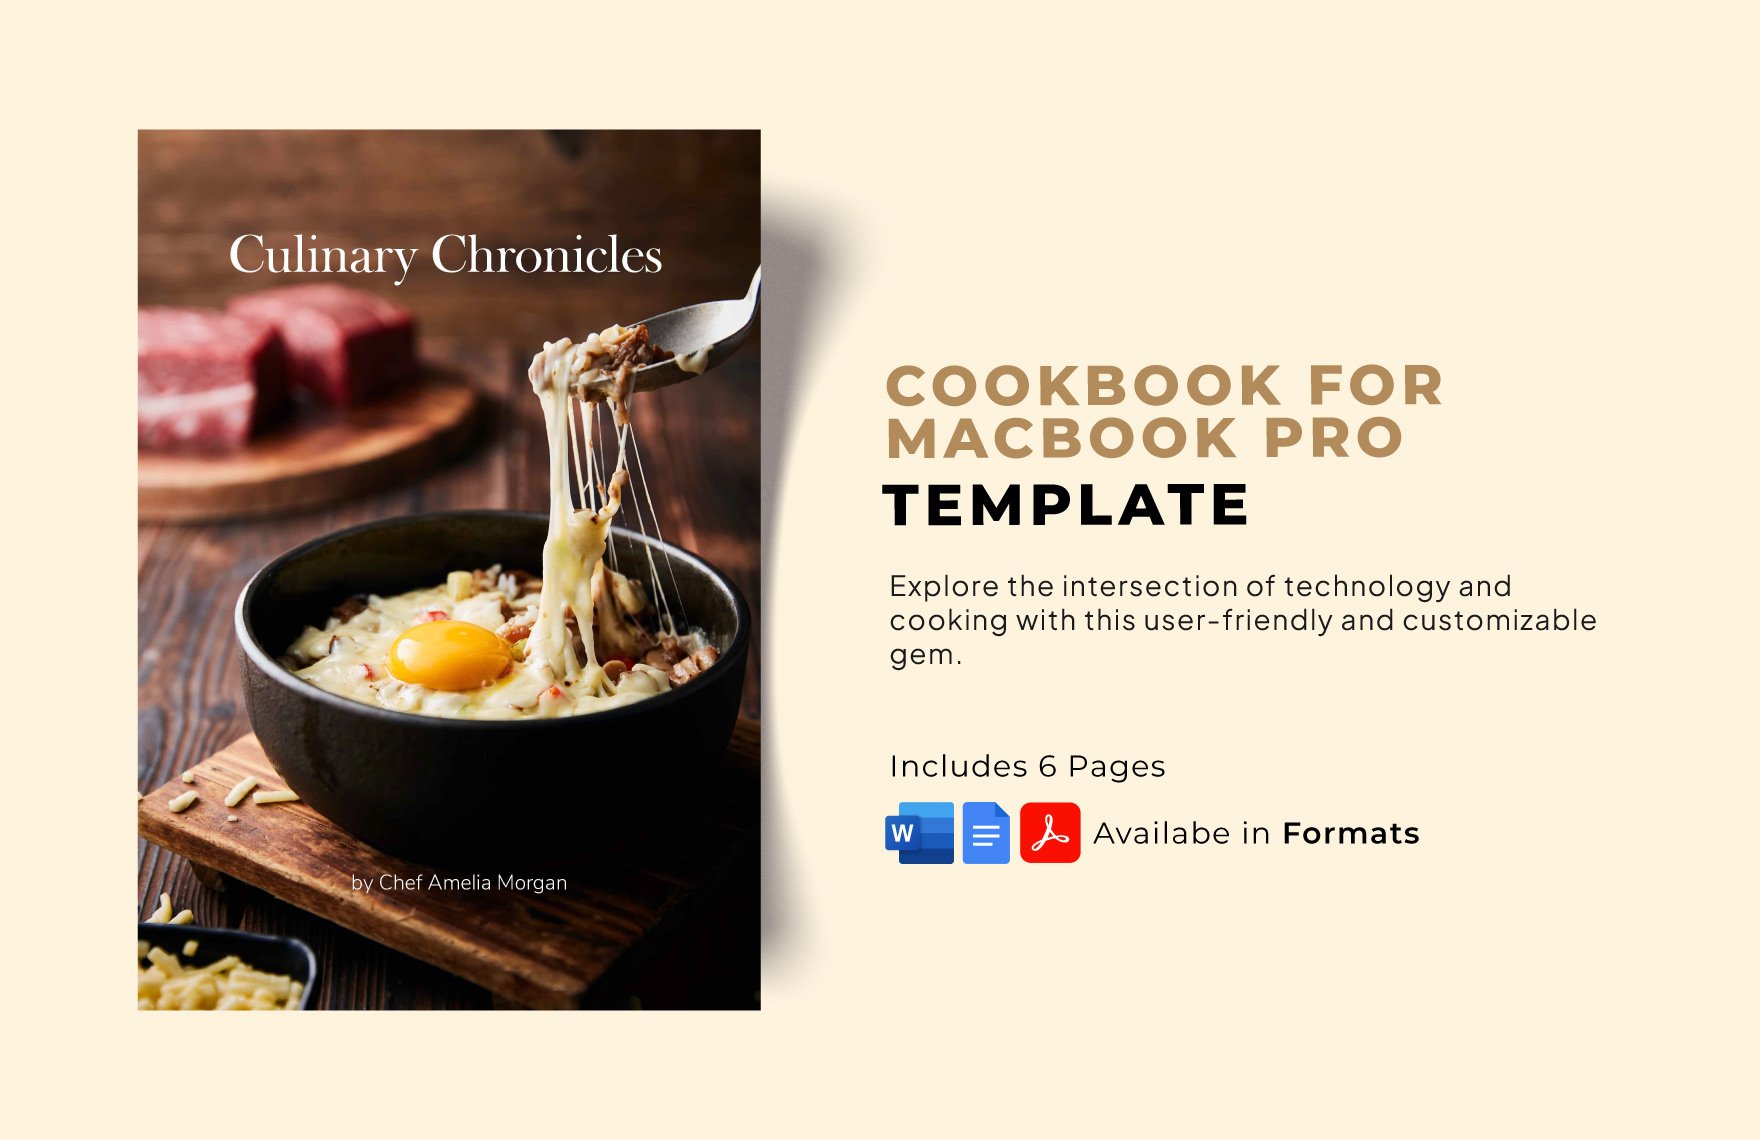 Cookbook for Macbook Pro Template